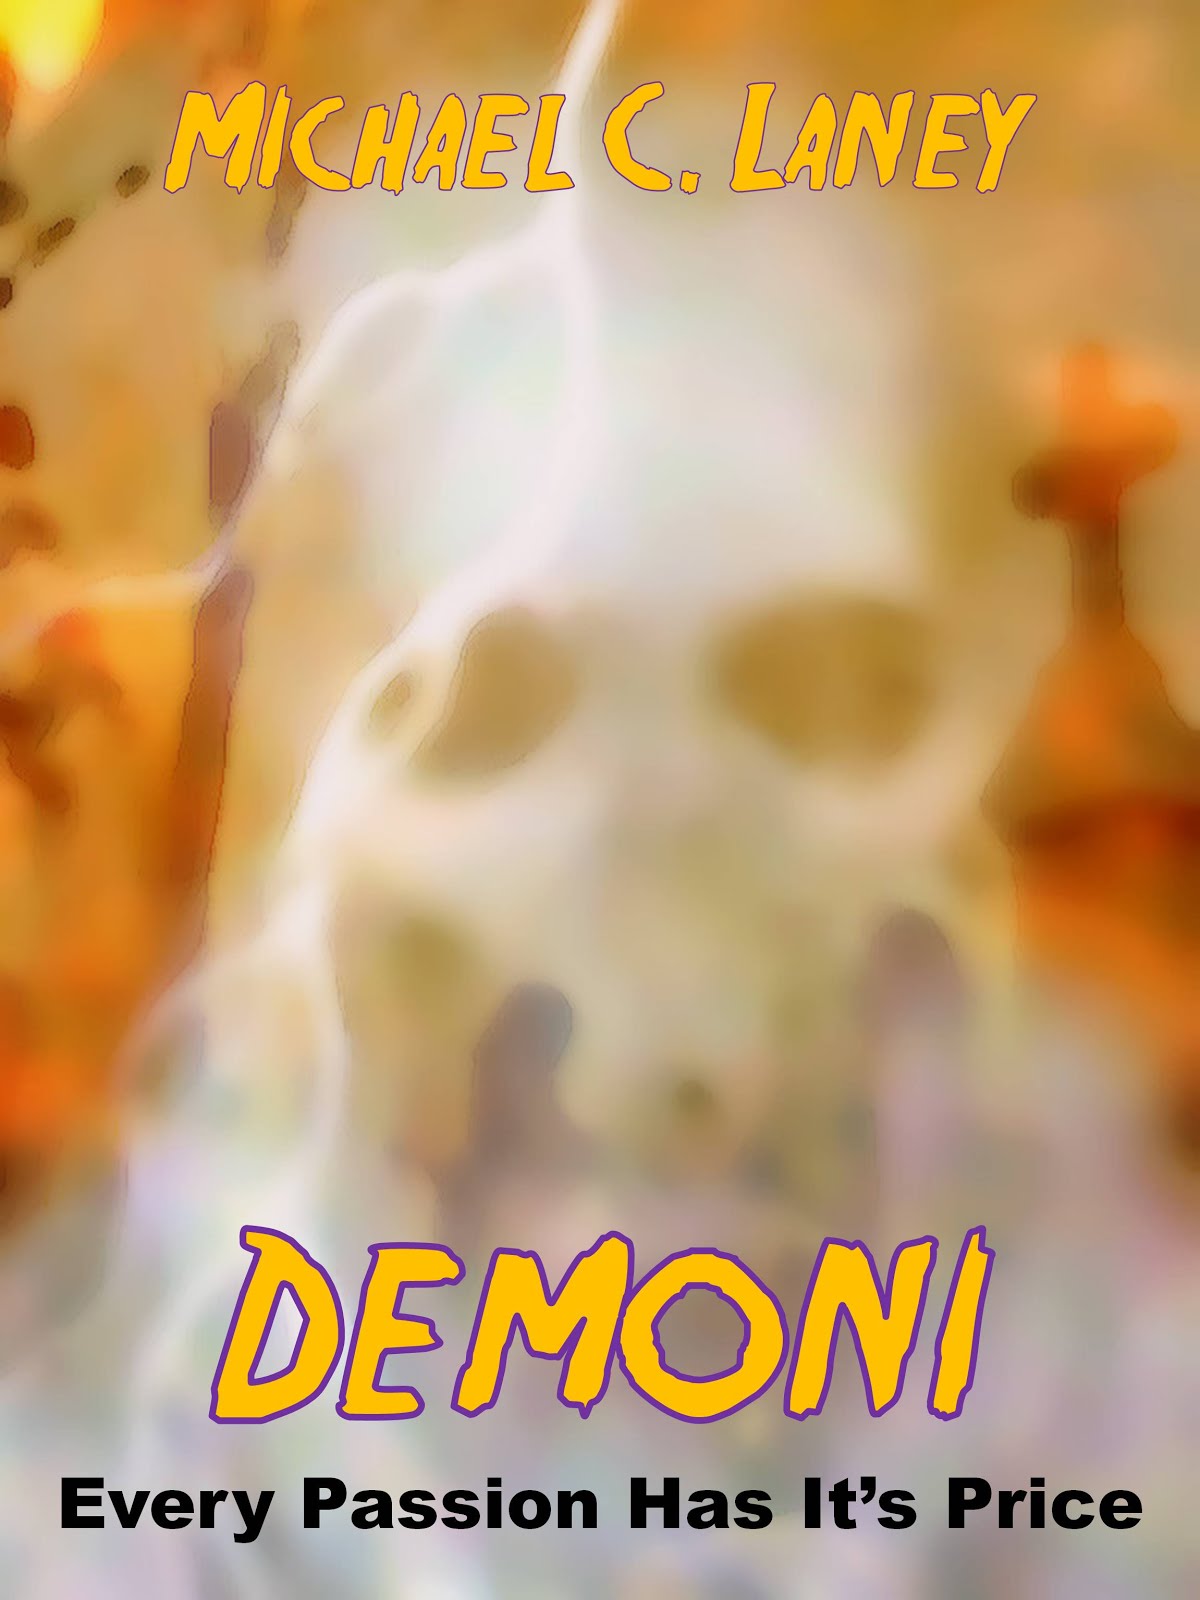 Demoni